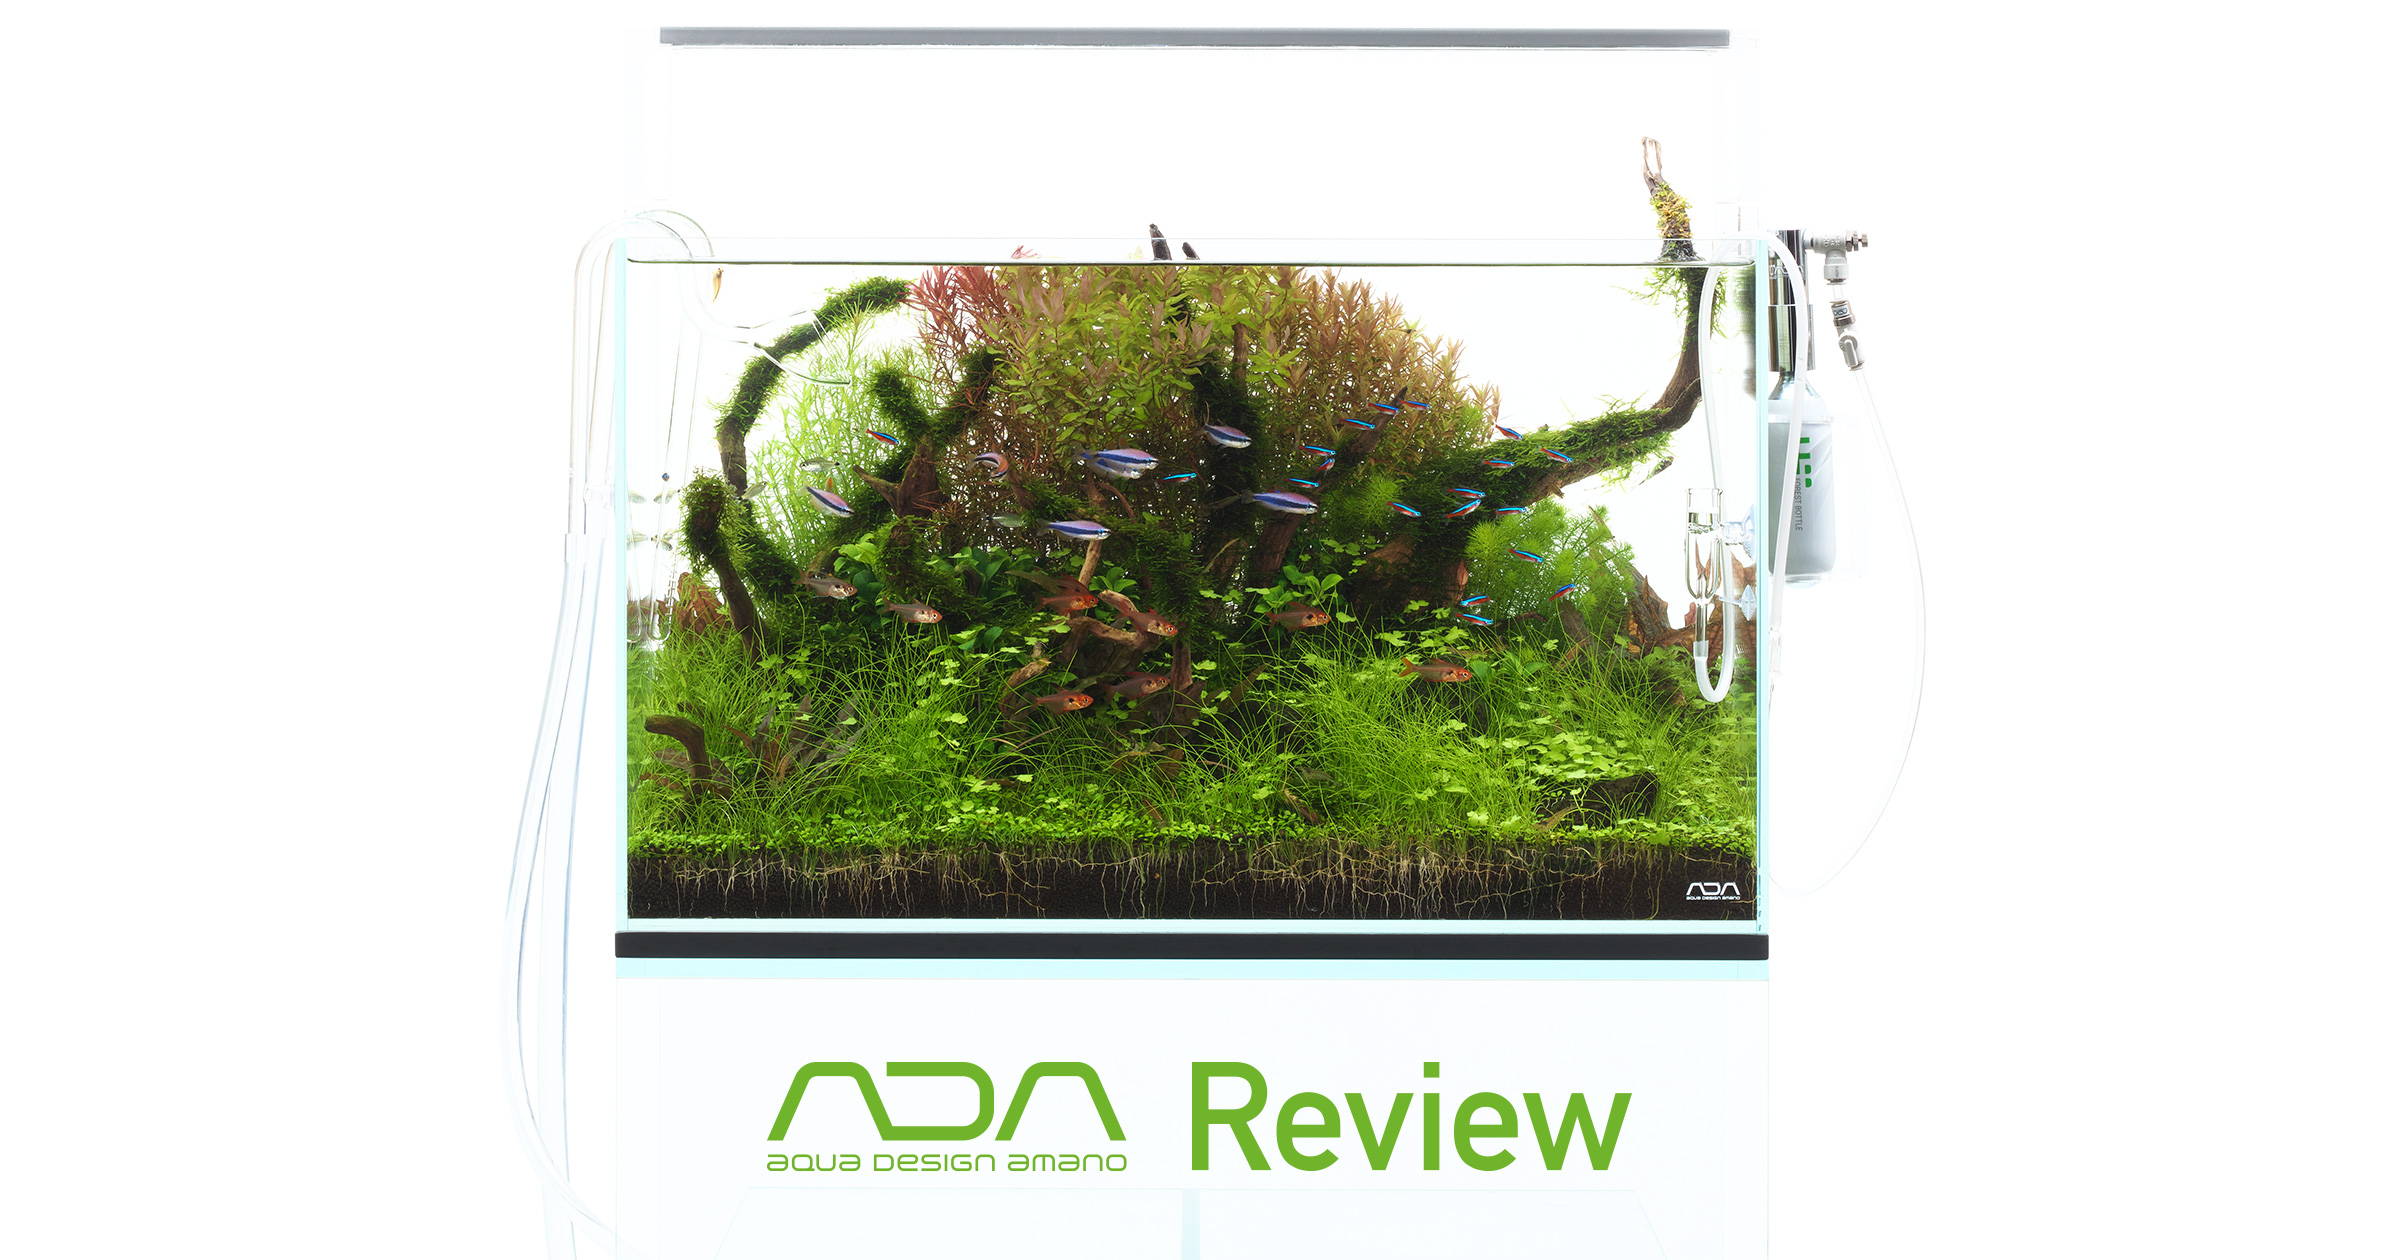 ADA Review 「基本の60㎝水槽システム」 | AQUA DESIGN AMANO